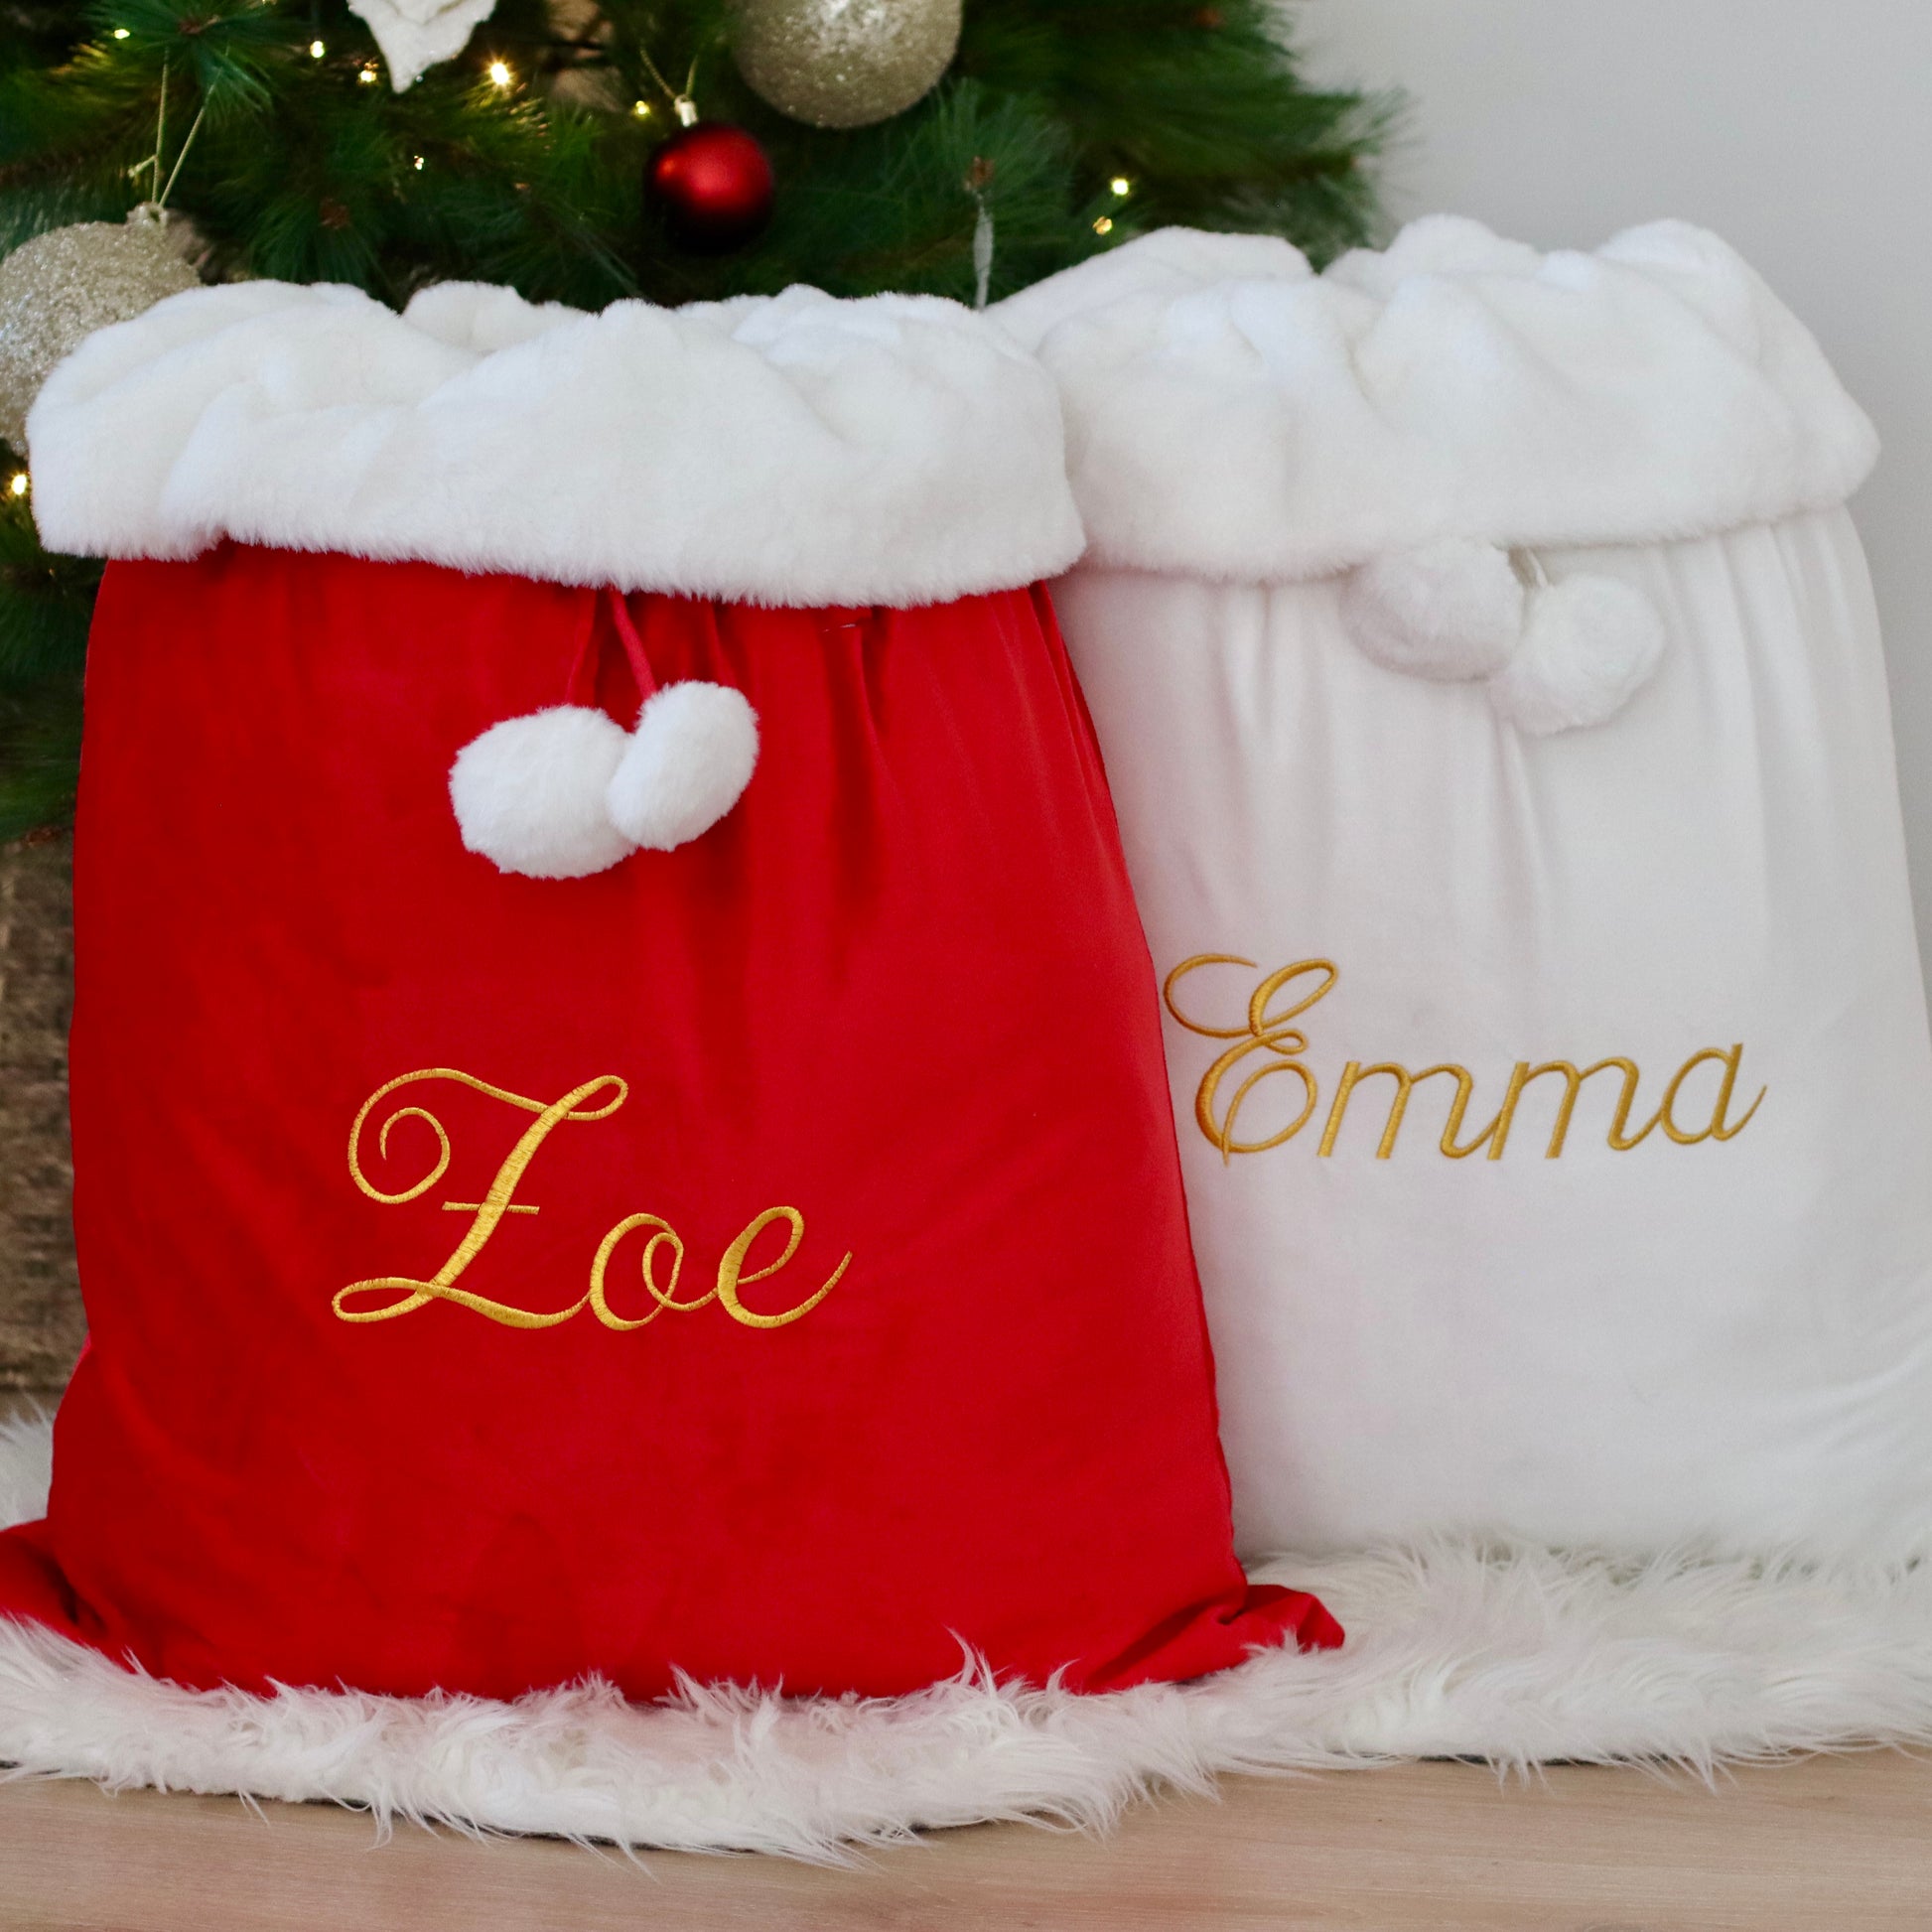 These personalised santa sacks are perfect as a keepsake